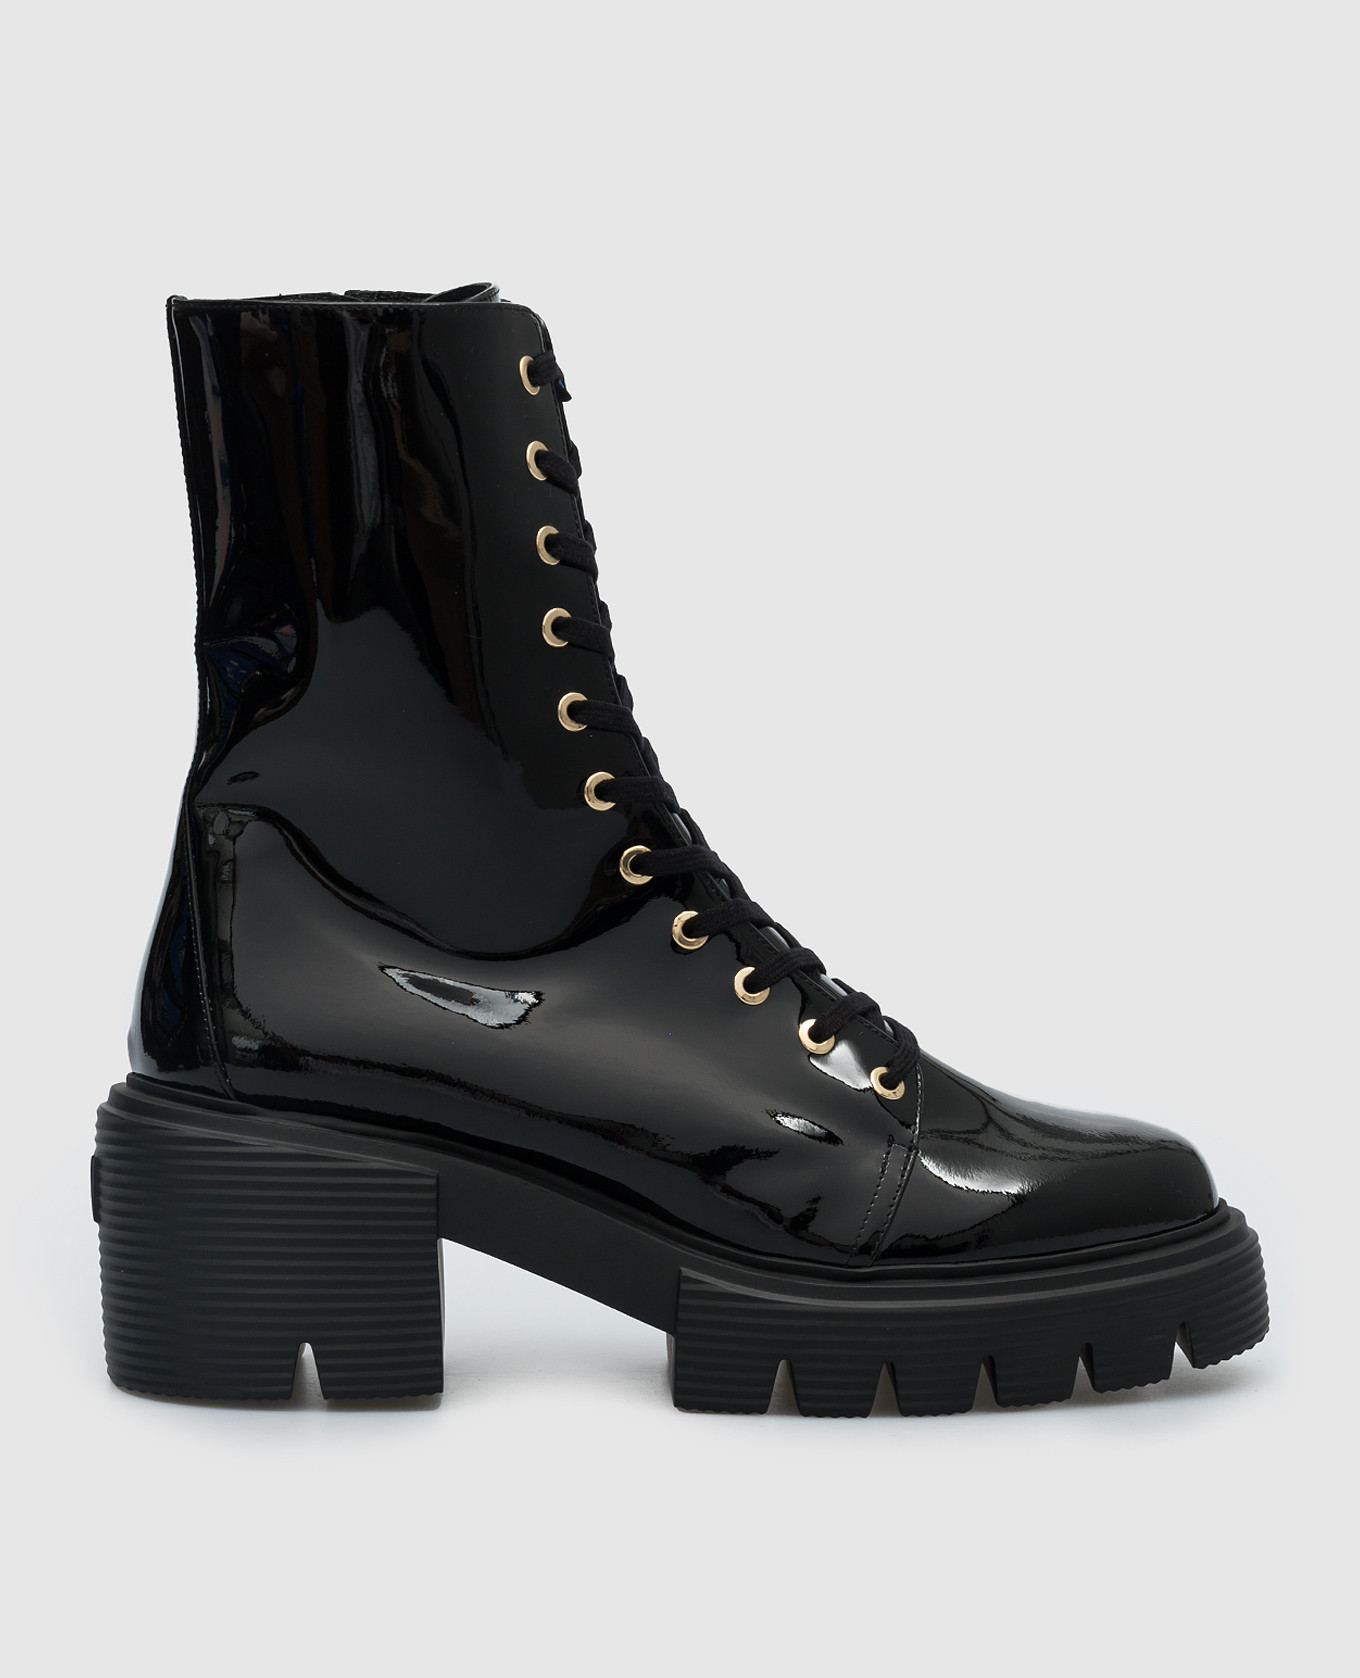 Black patent leather Soho boots